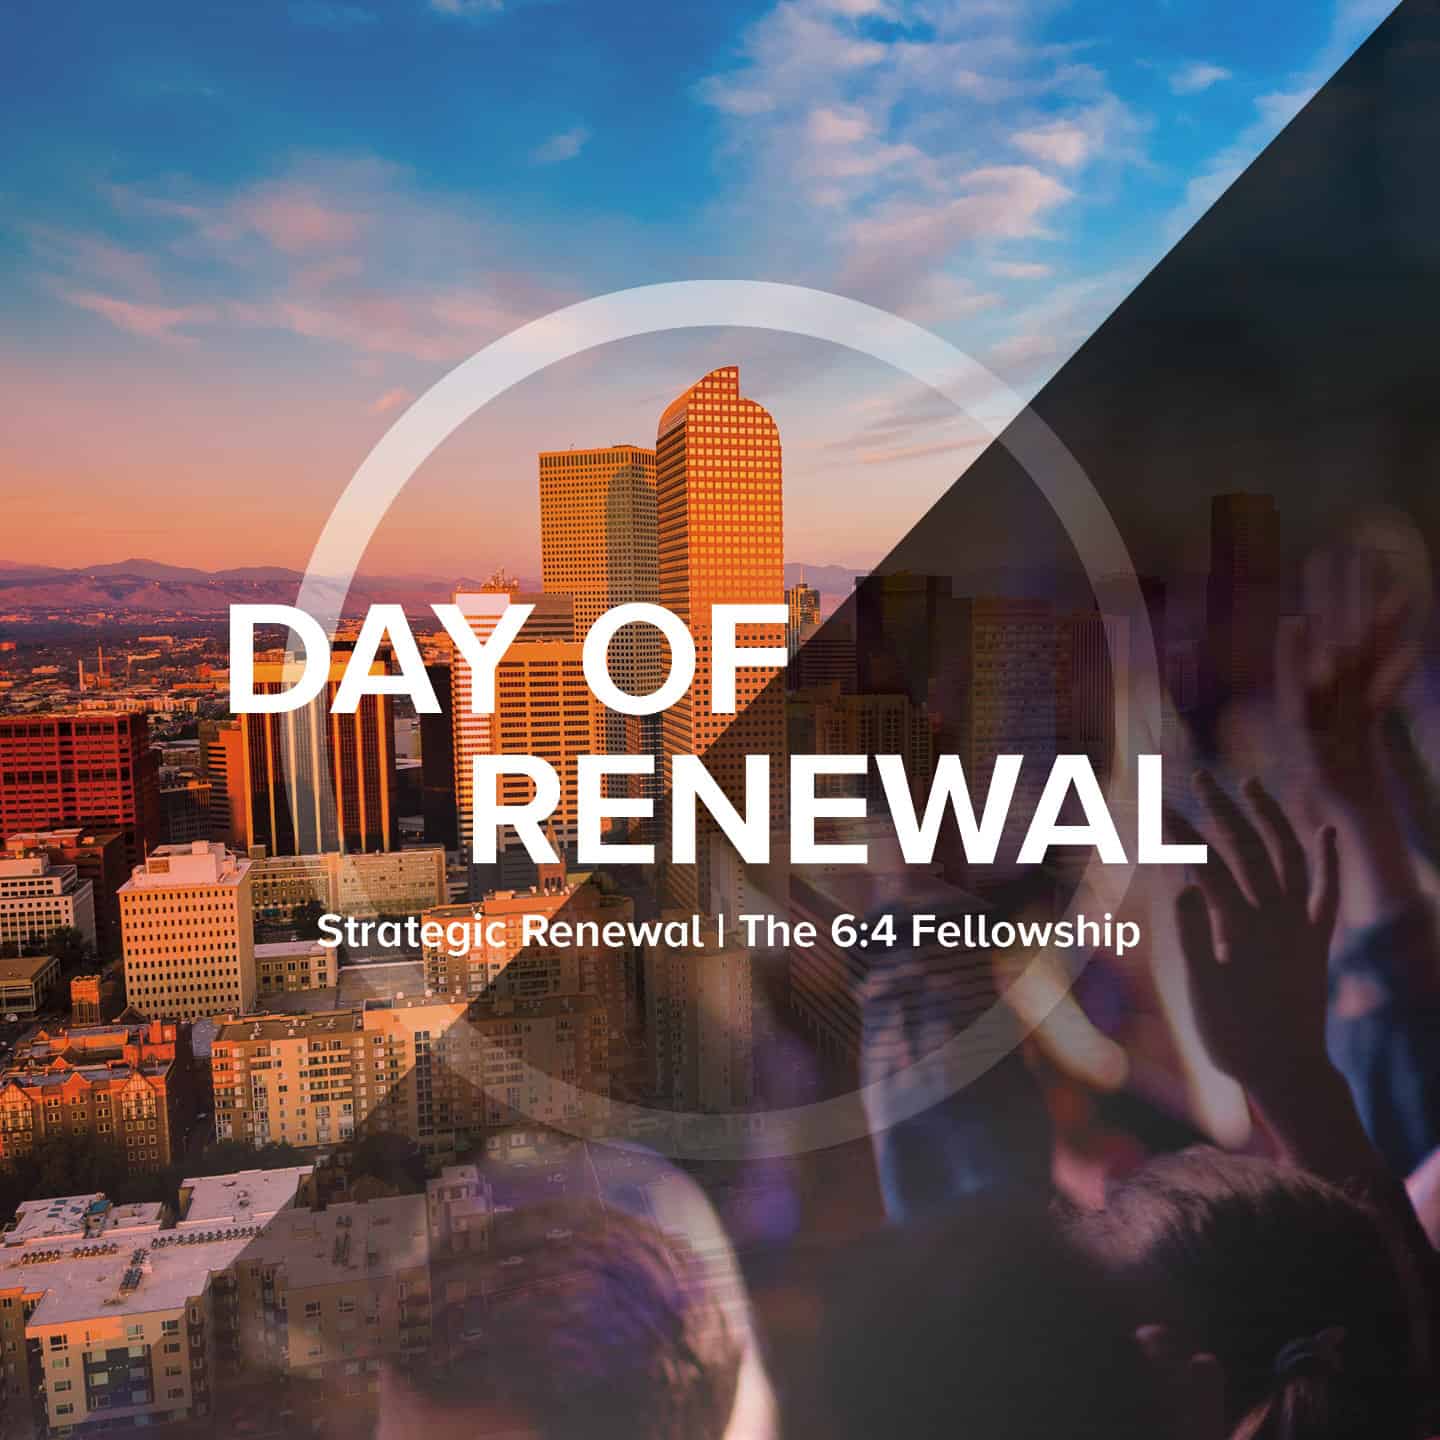 Denver City Scape behind Day of Renewal logo